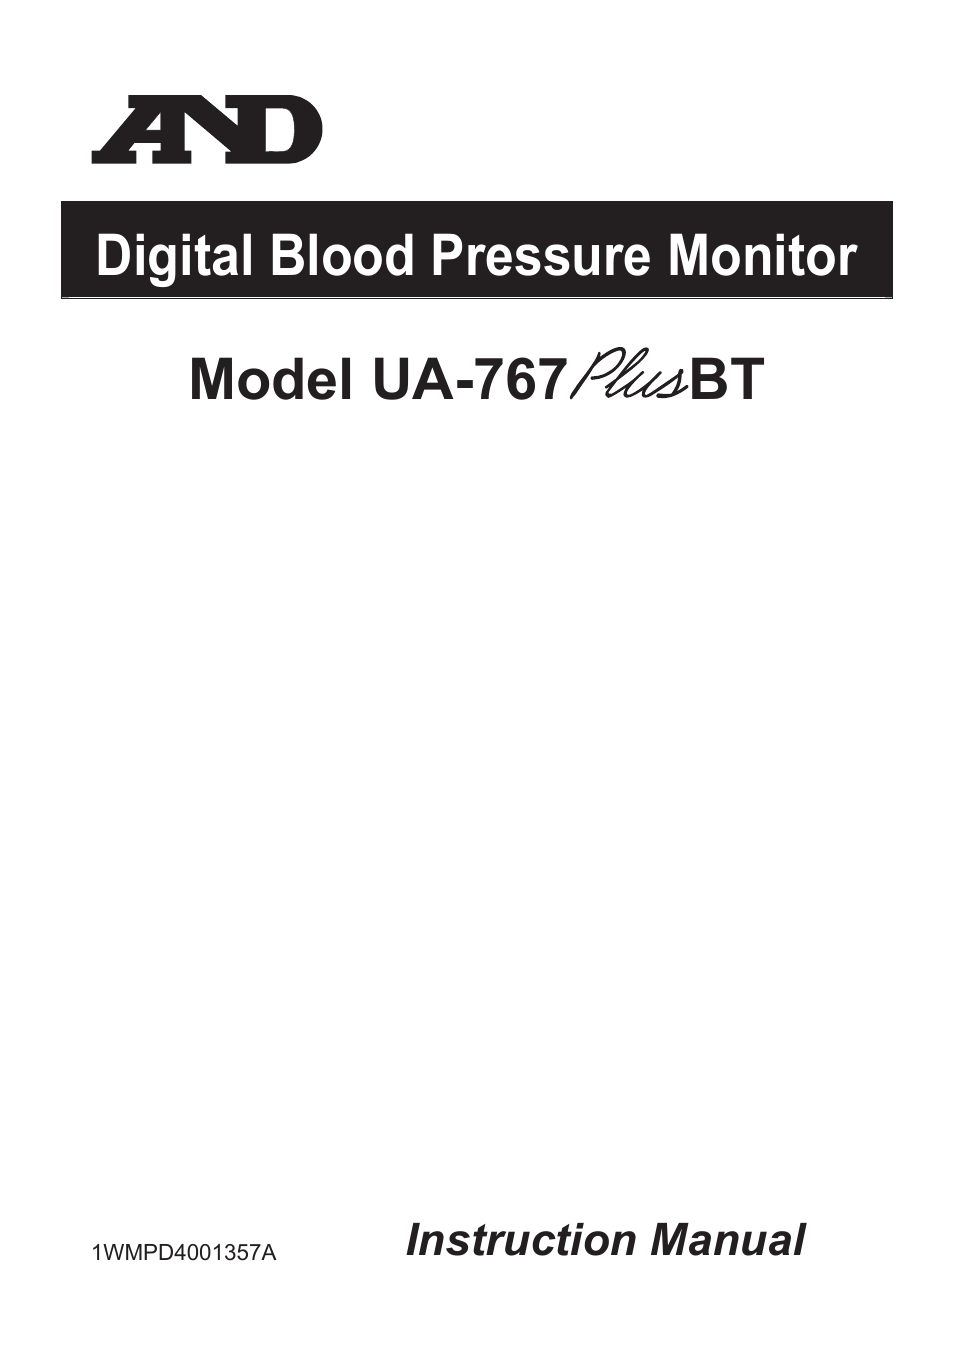 A & D Digital Blood Pressure Monitor UA-767 Plus BT